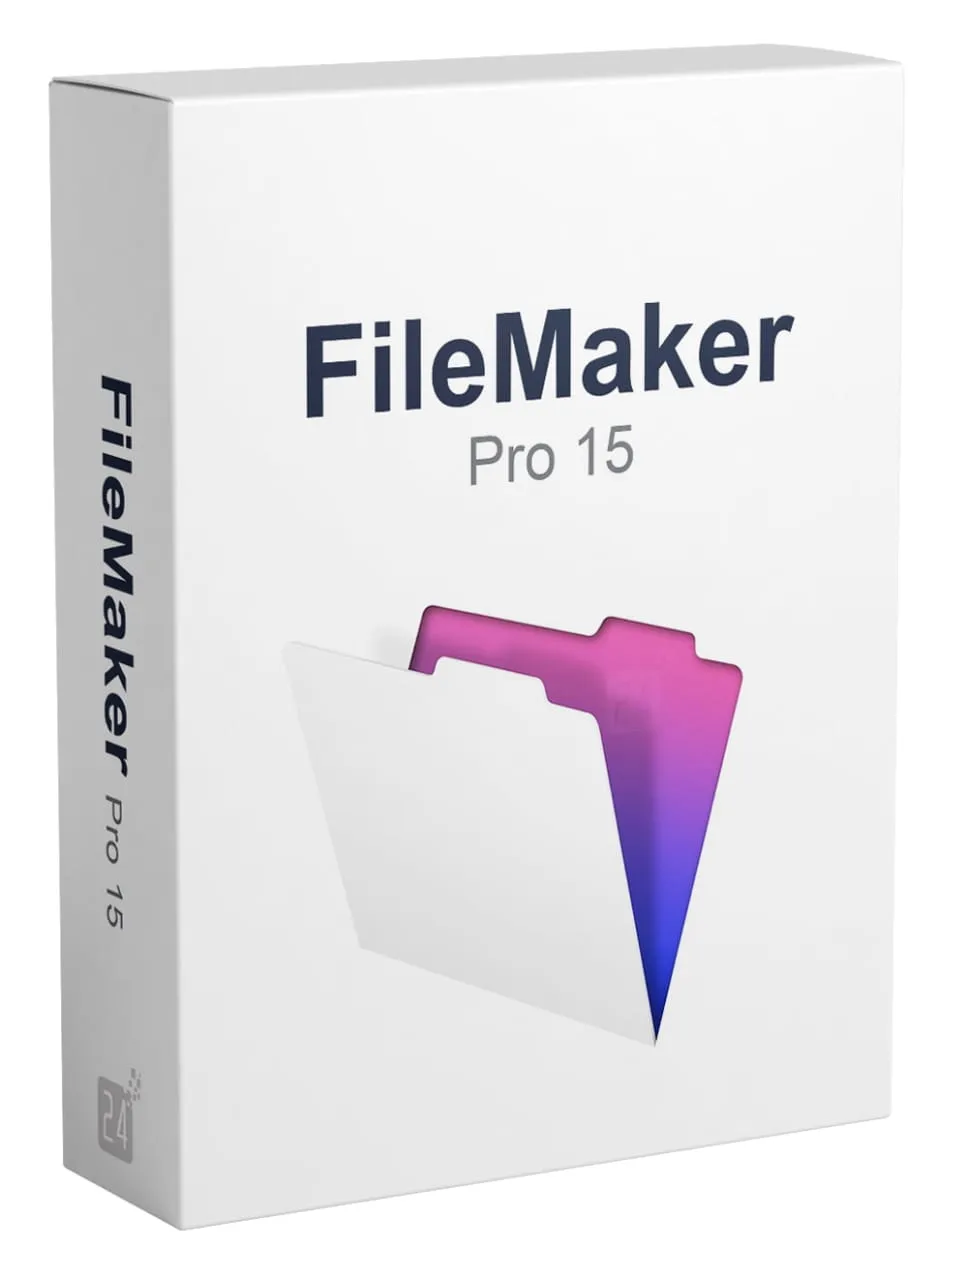  FileMaker Pro 15